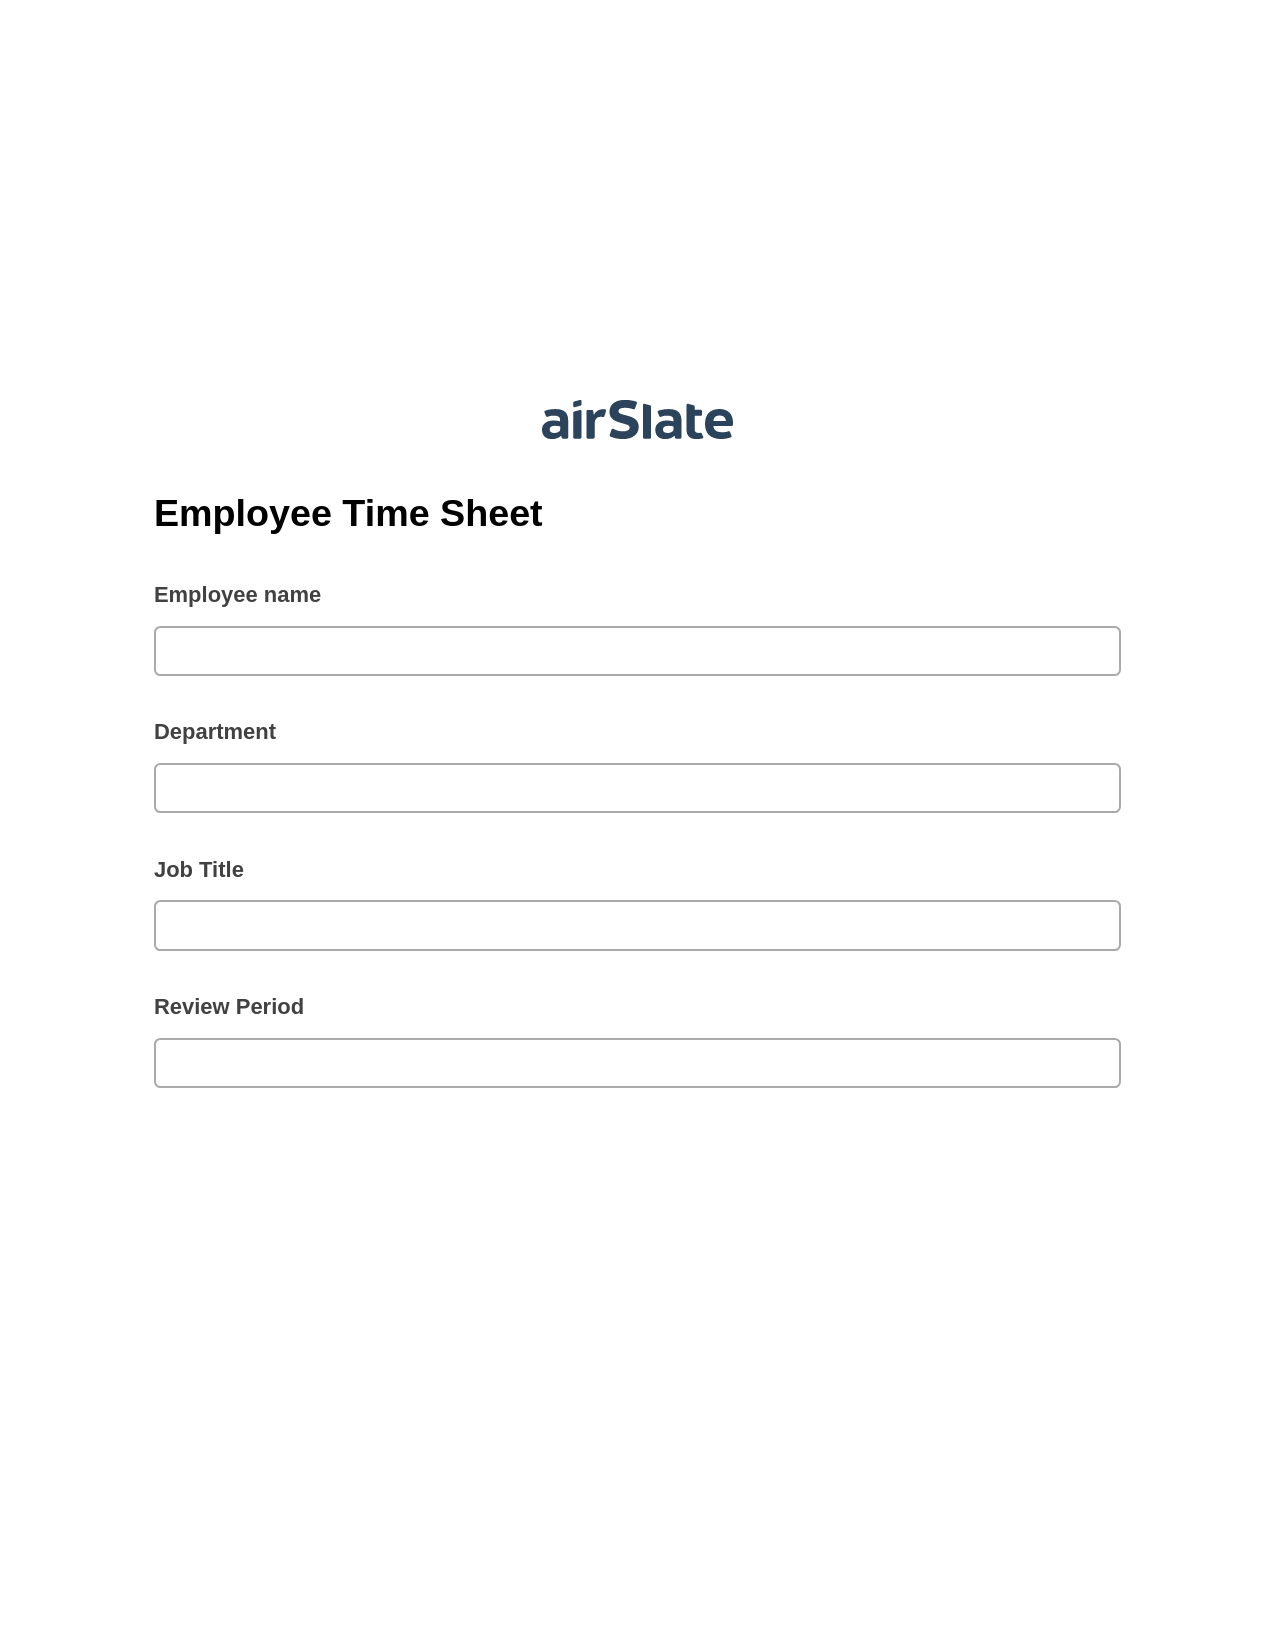 Multirole Employee Time Sheet Pre-fill from CSV File Bot, Update Audit Trail Bot, Email Notification Postfinish Bot